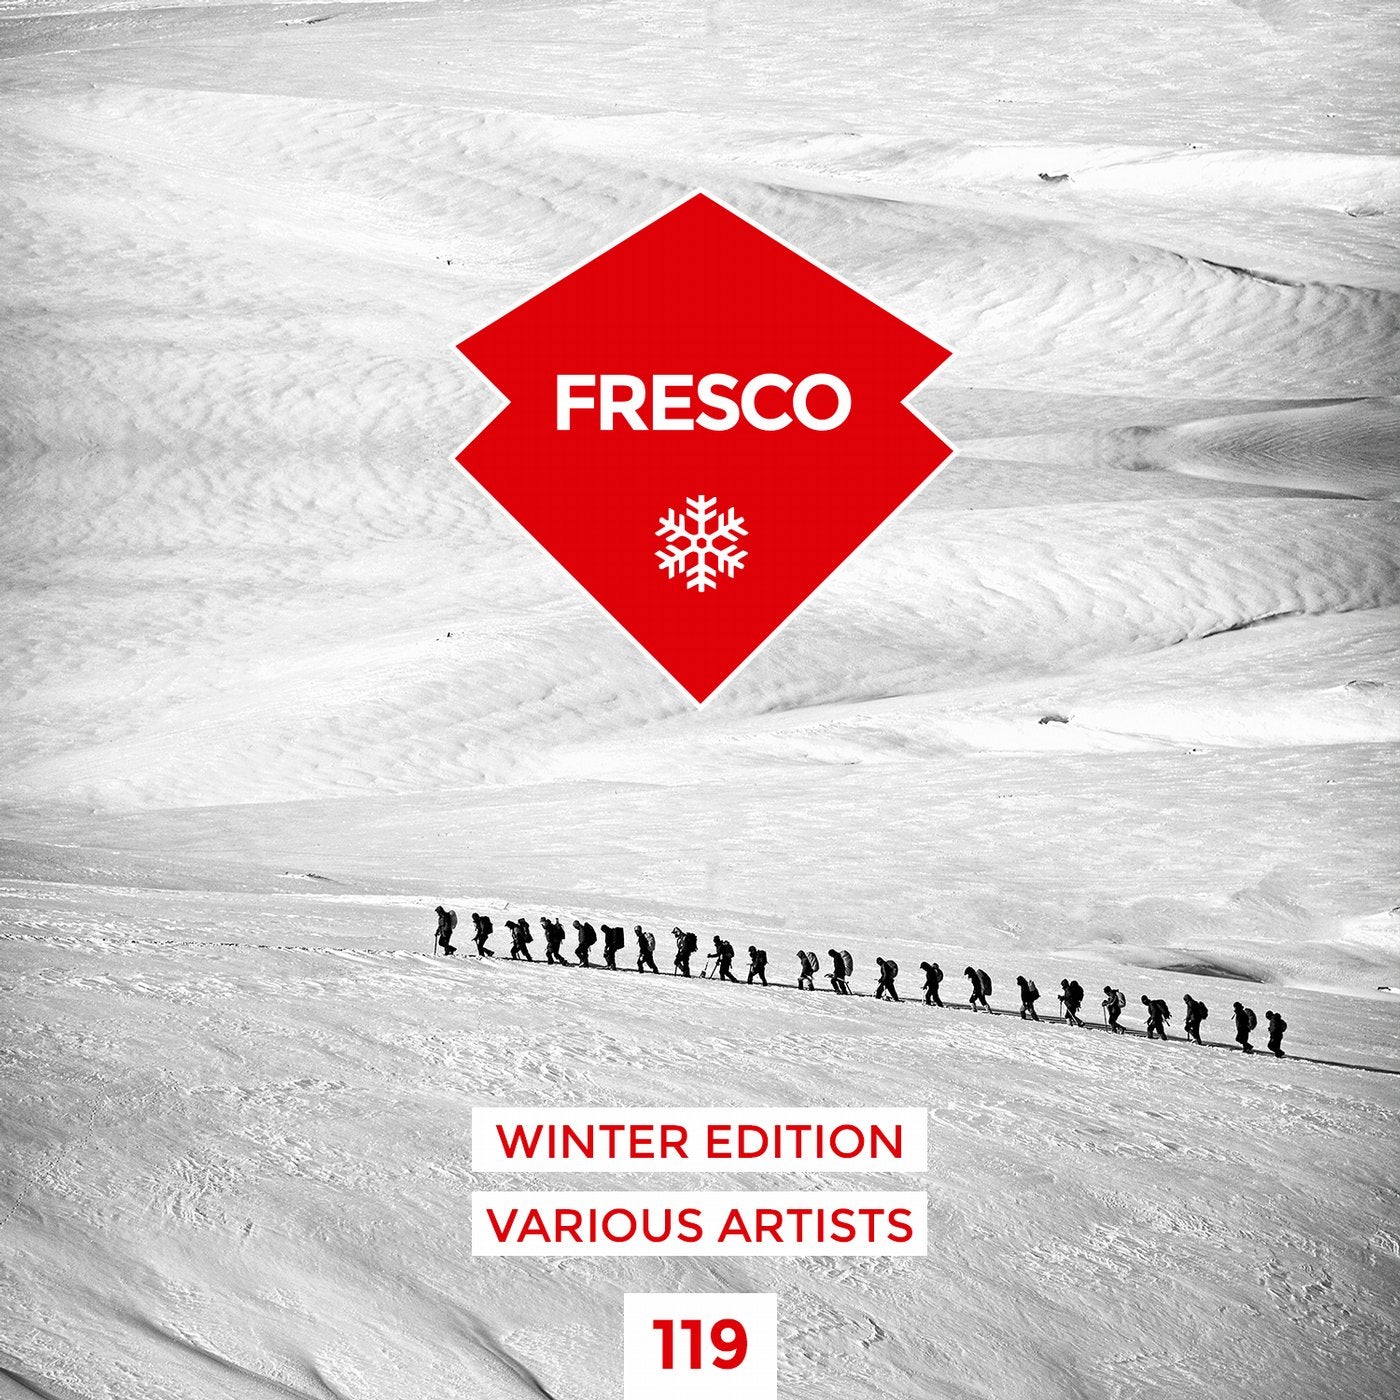 Fresco Winter Edition 2018